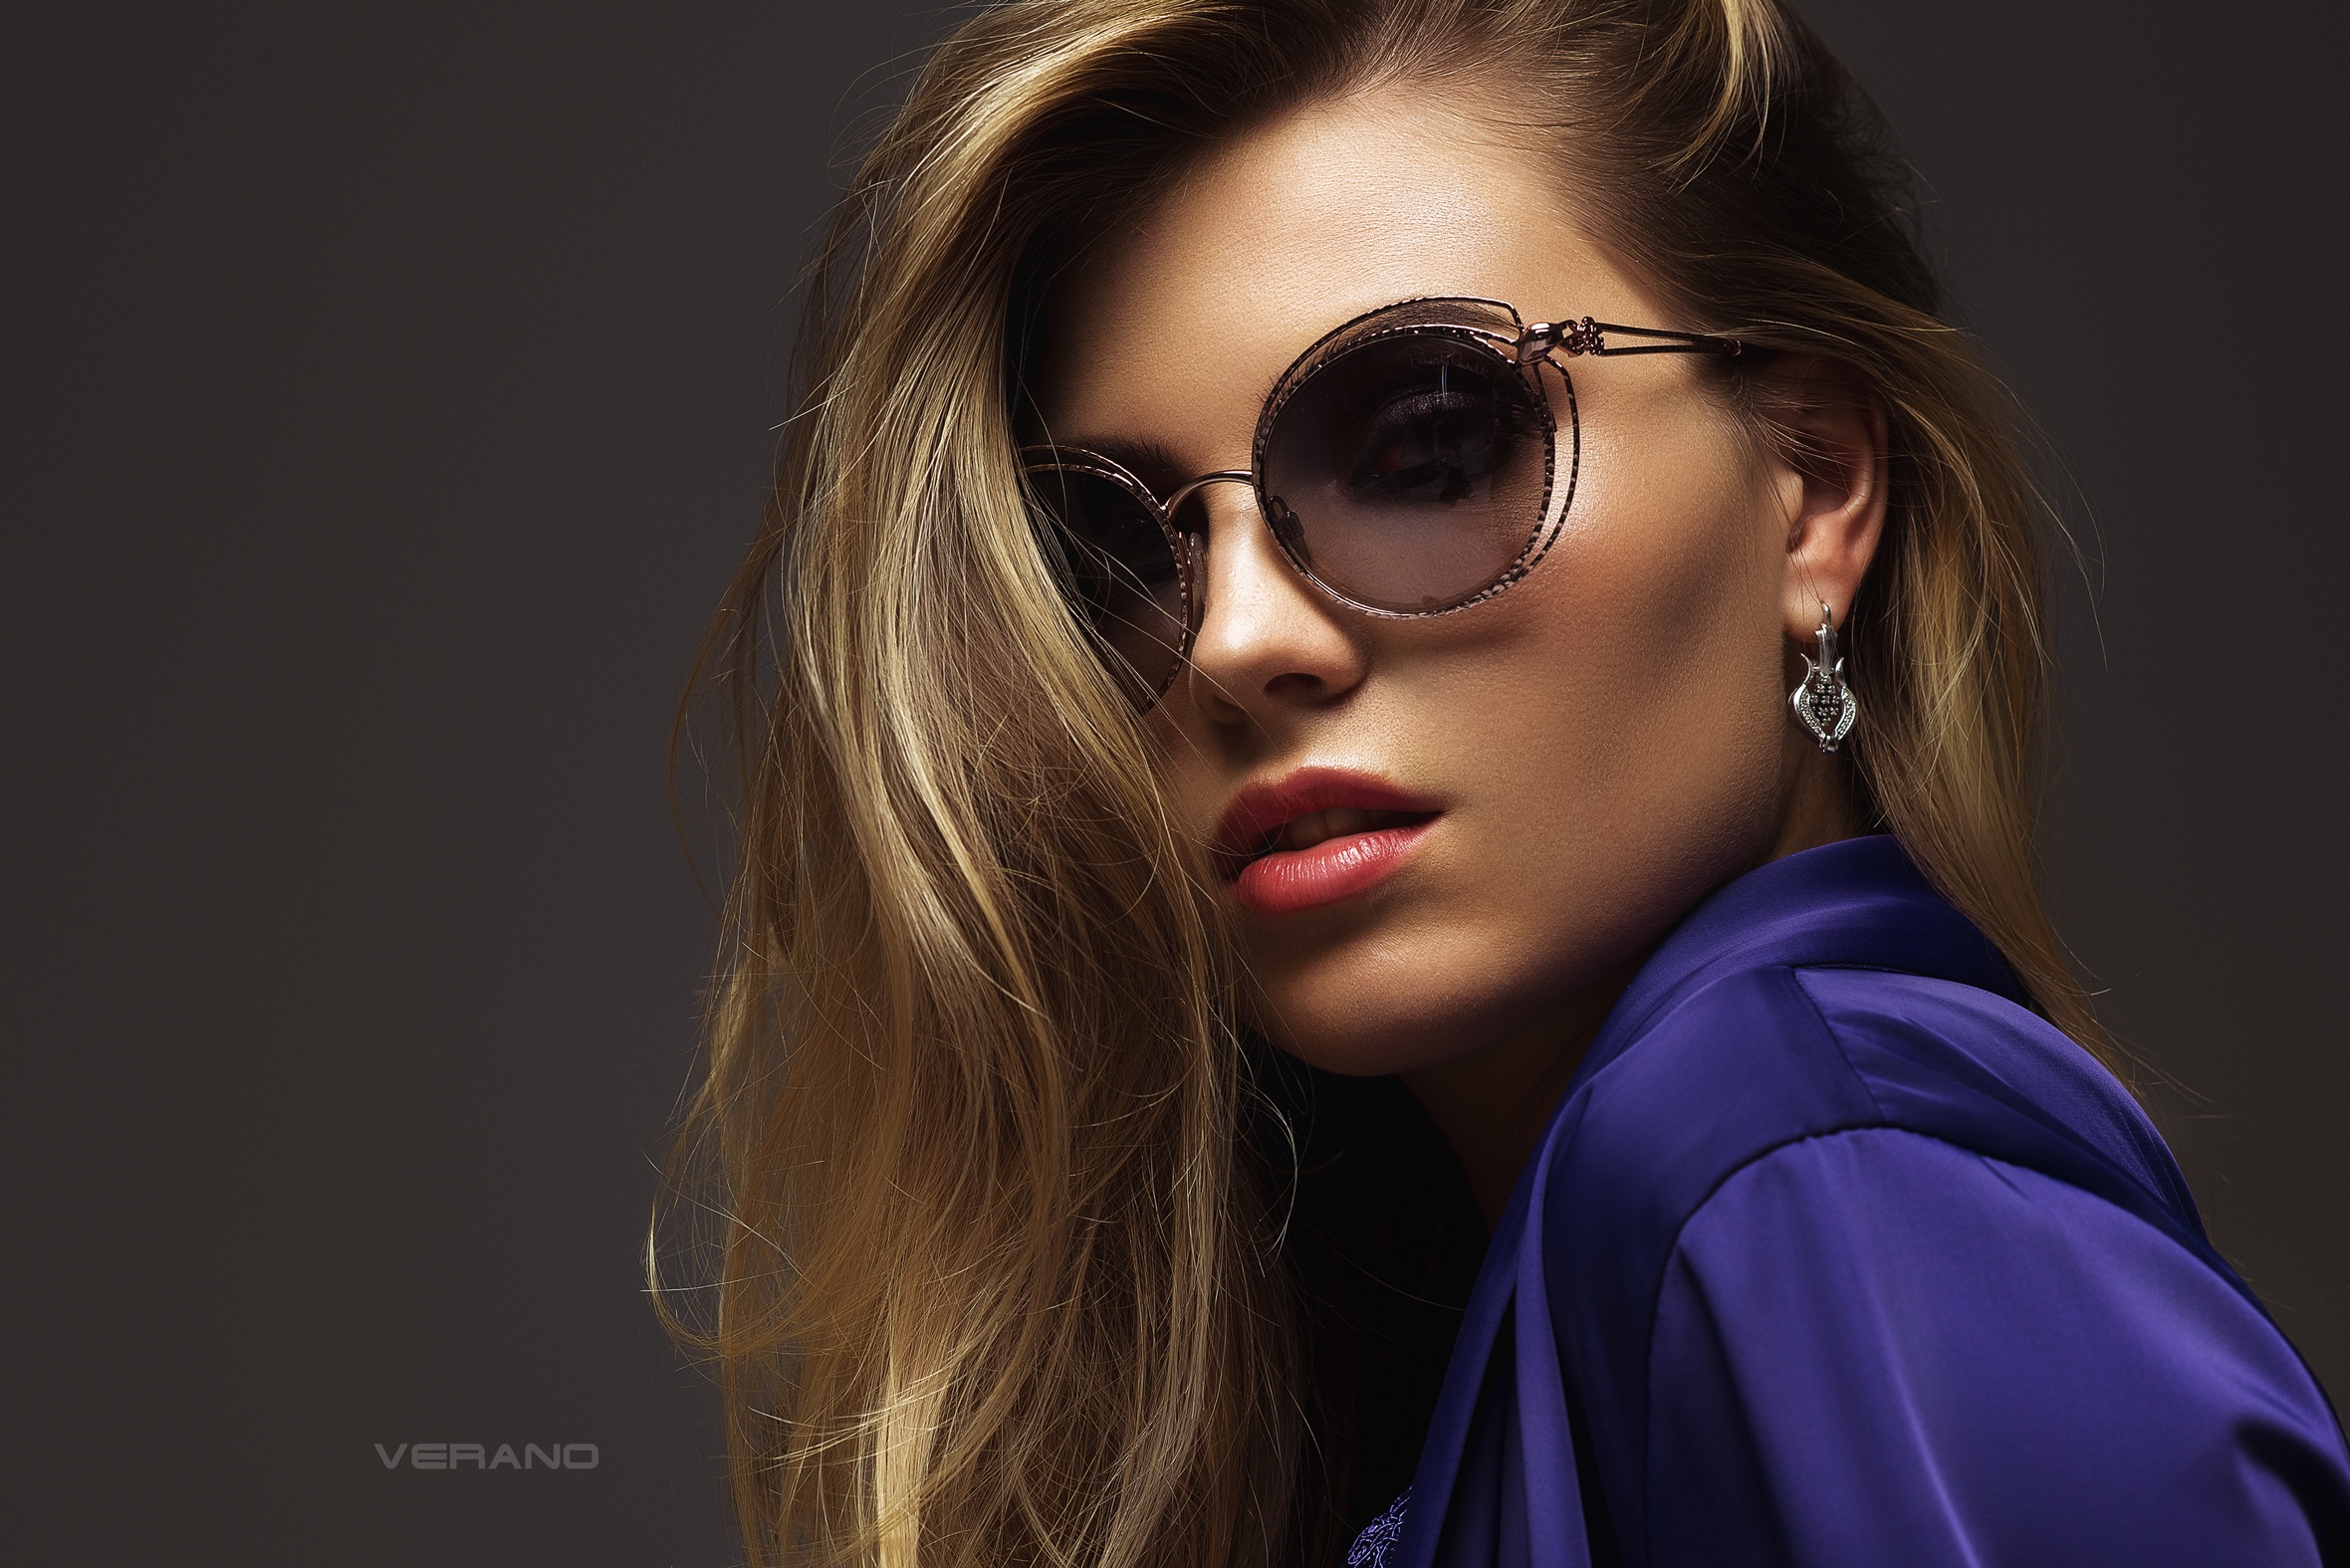 Women Model Face Simple Background Women With Glasses Blonde Portrait Nikolas Verano 2360x1575